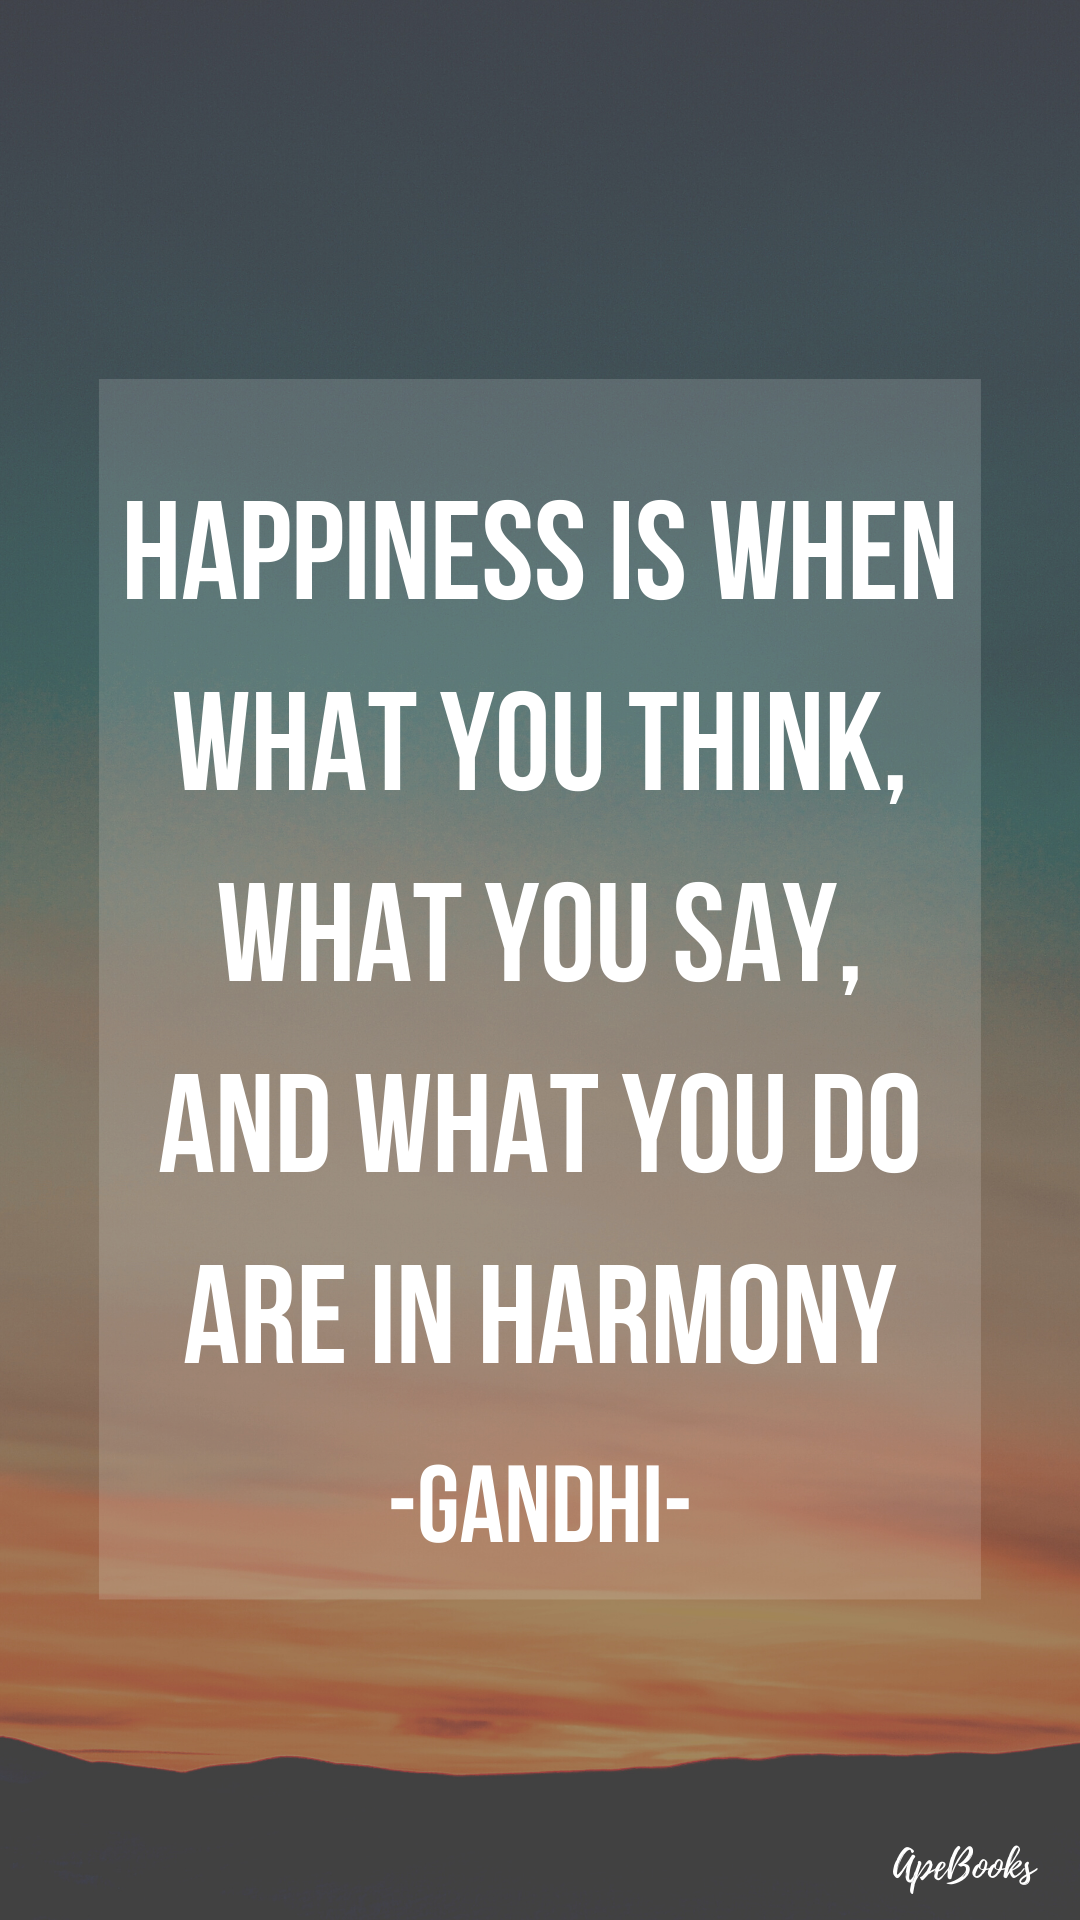 Inspirational quotes from mahatma gandhi